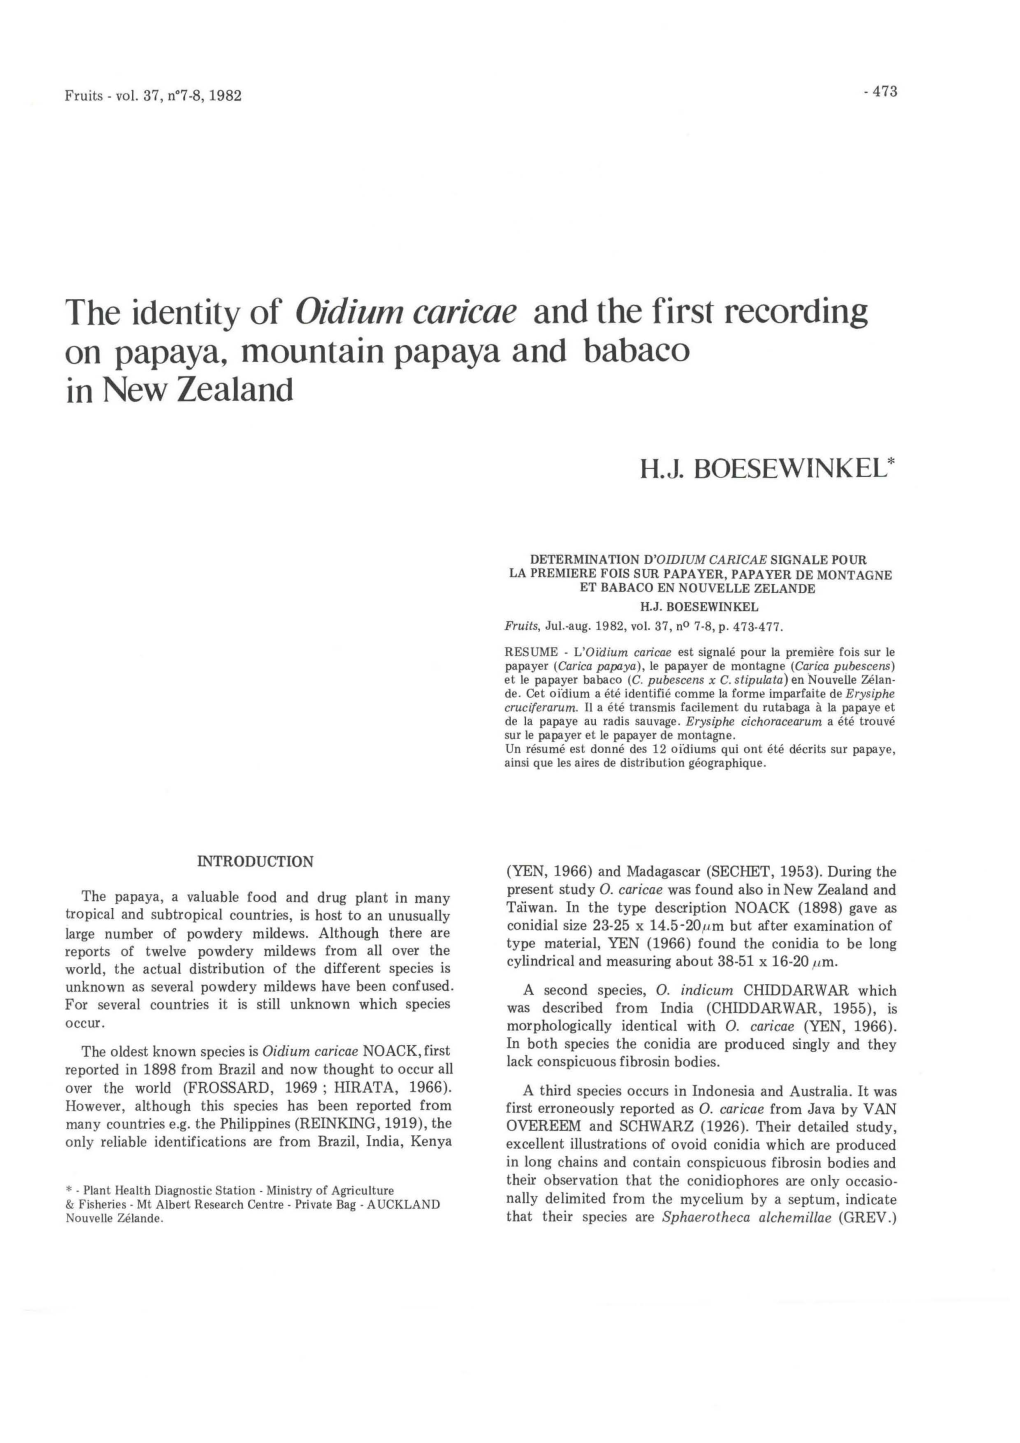 The Identity of Oidium Caricae and the First Recording on Papaya, Mountain Papaya and Babaco in New Zealand